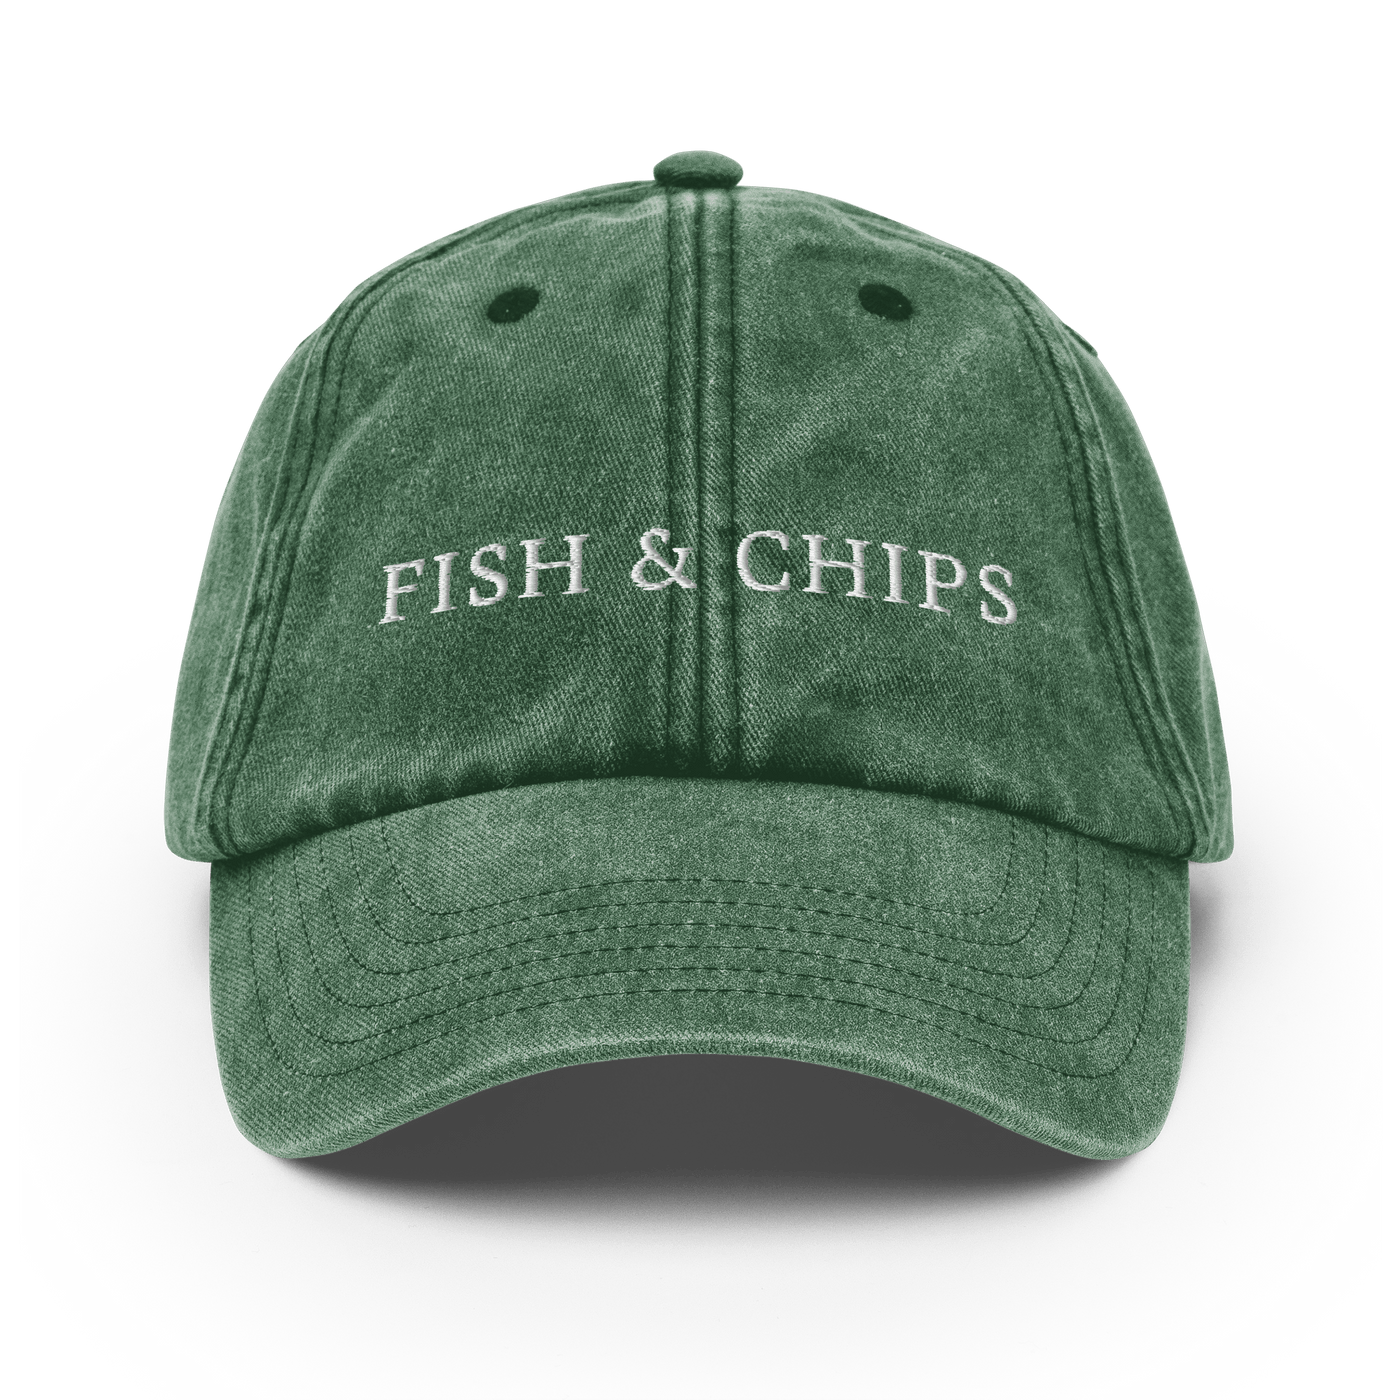 Fish & Chips Vintage Hat - Vintage Bottle Green - - Just Another Cap Store